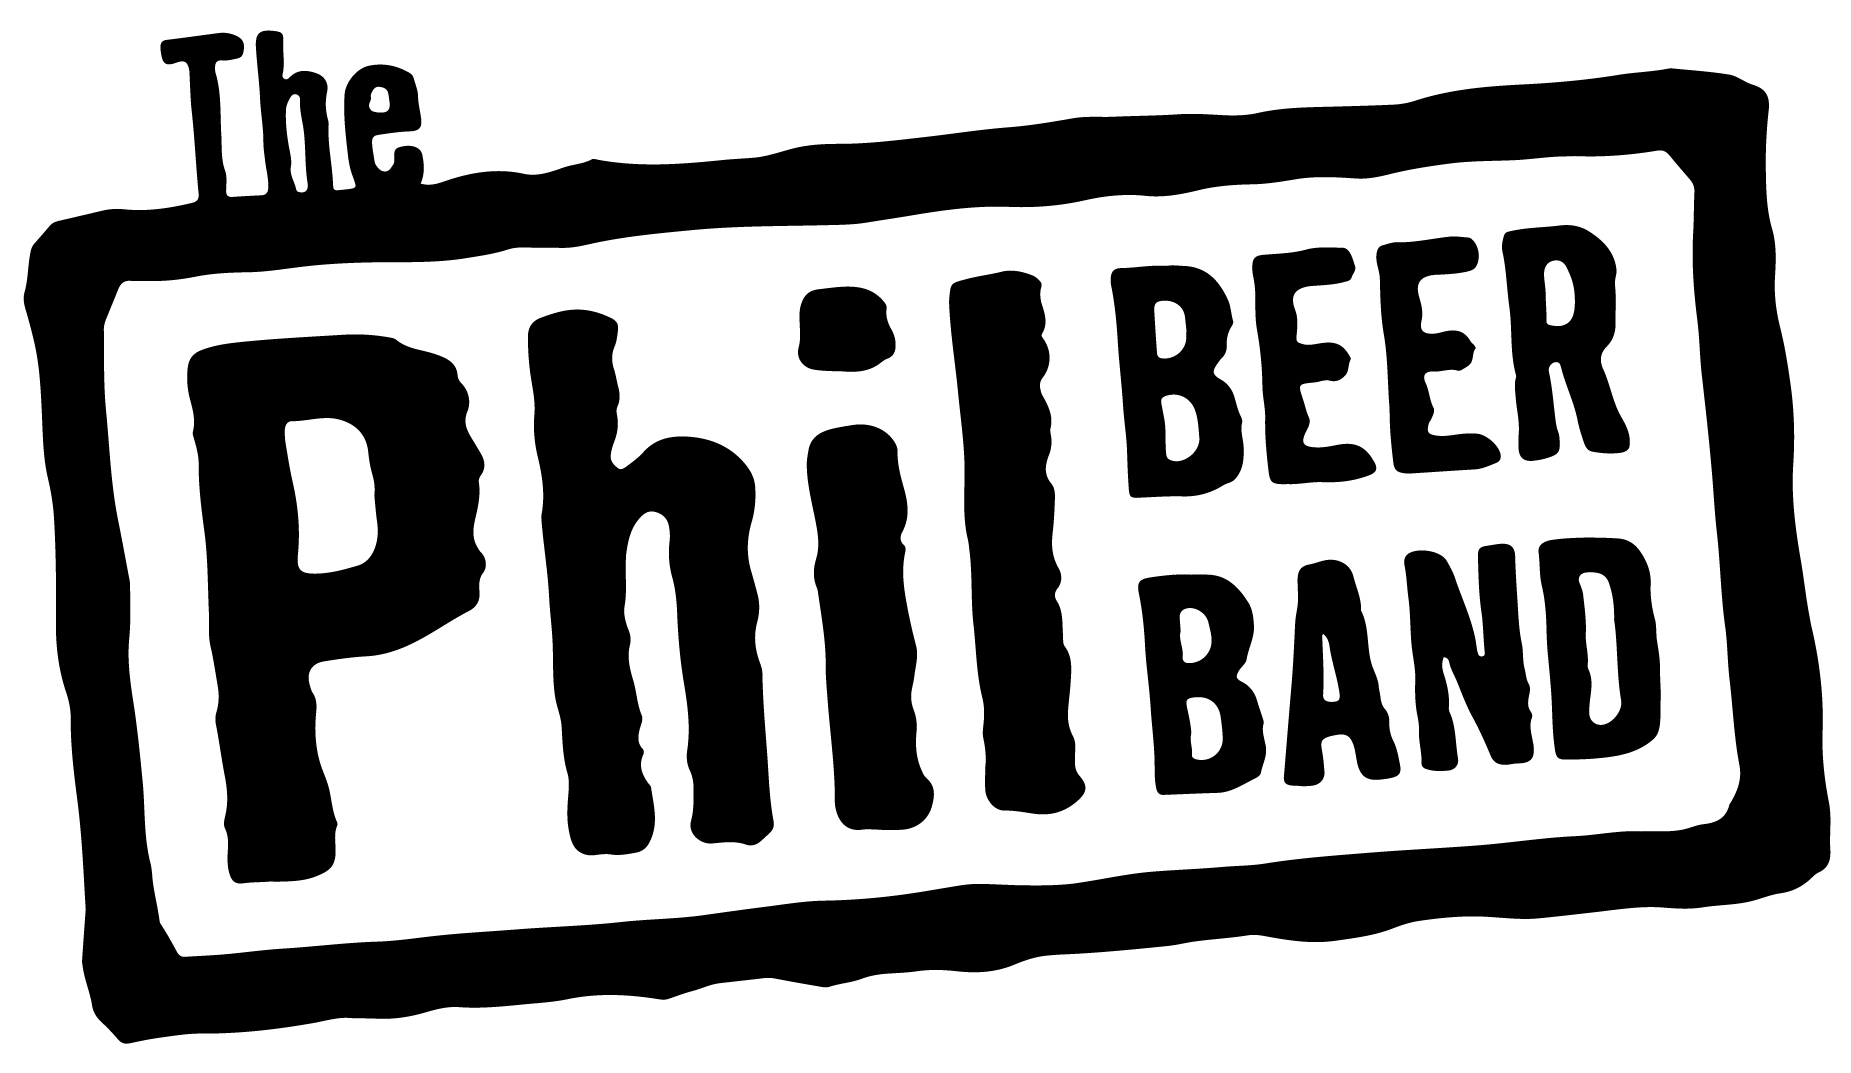 Phil Logo - Phil Beer Band Logo 01. Dorchester Arts. Putting The Arts At